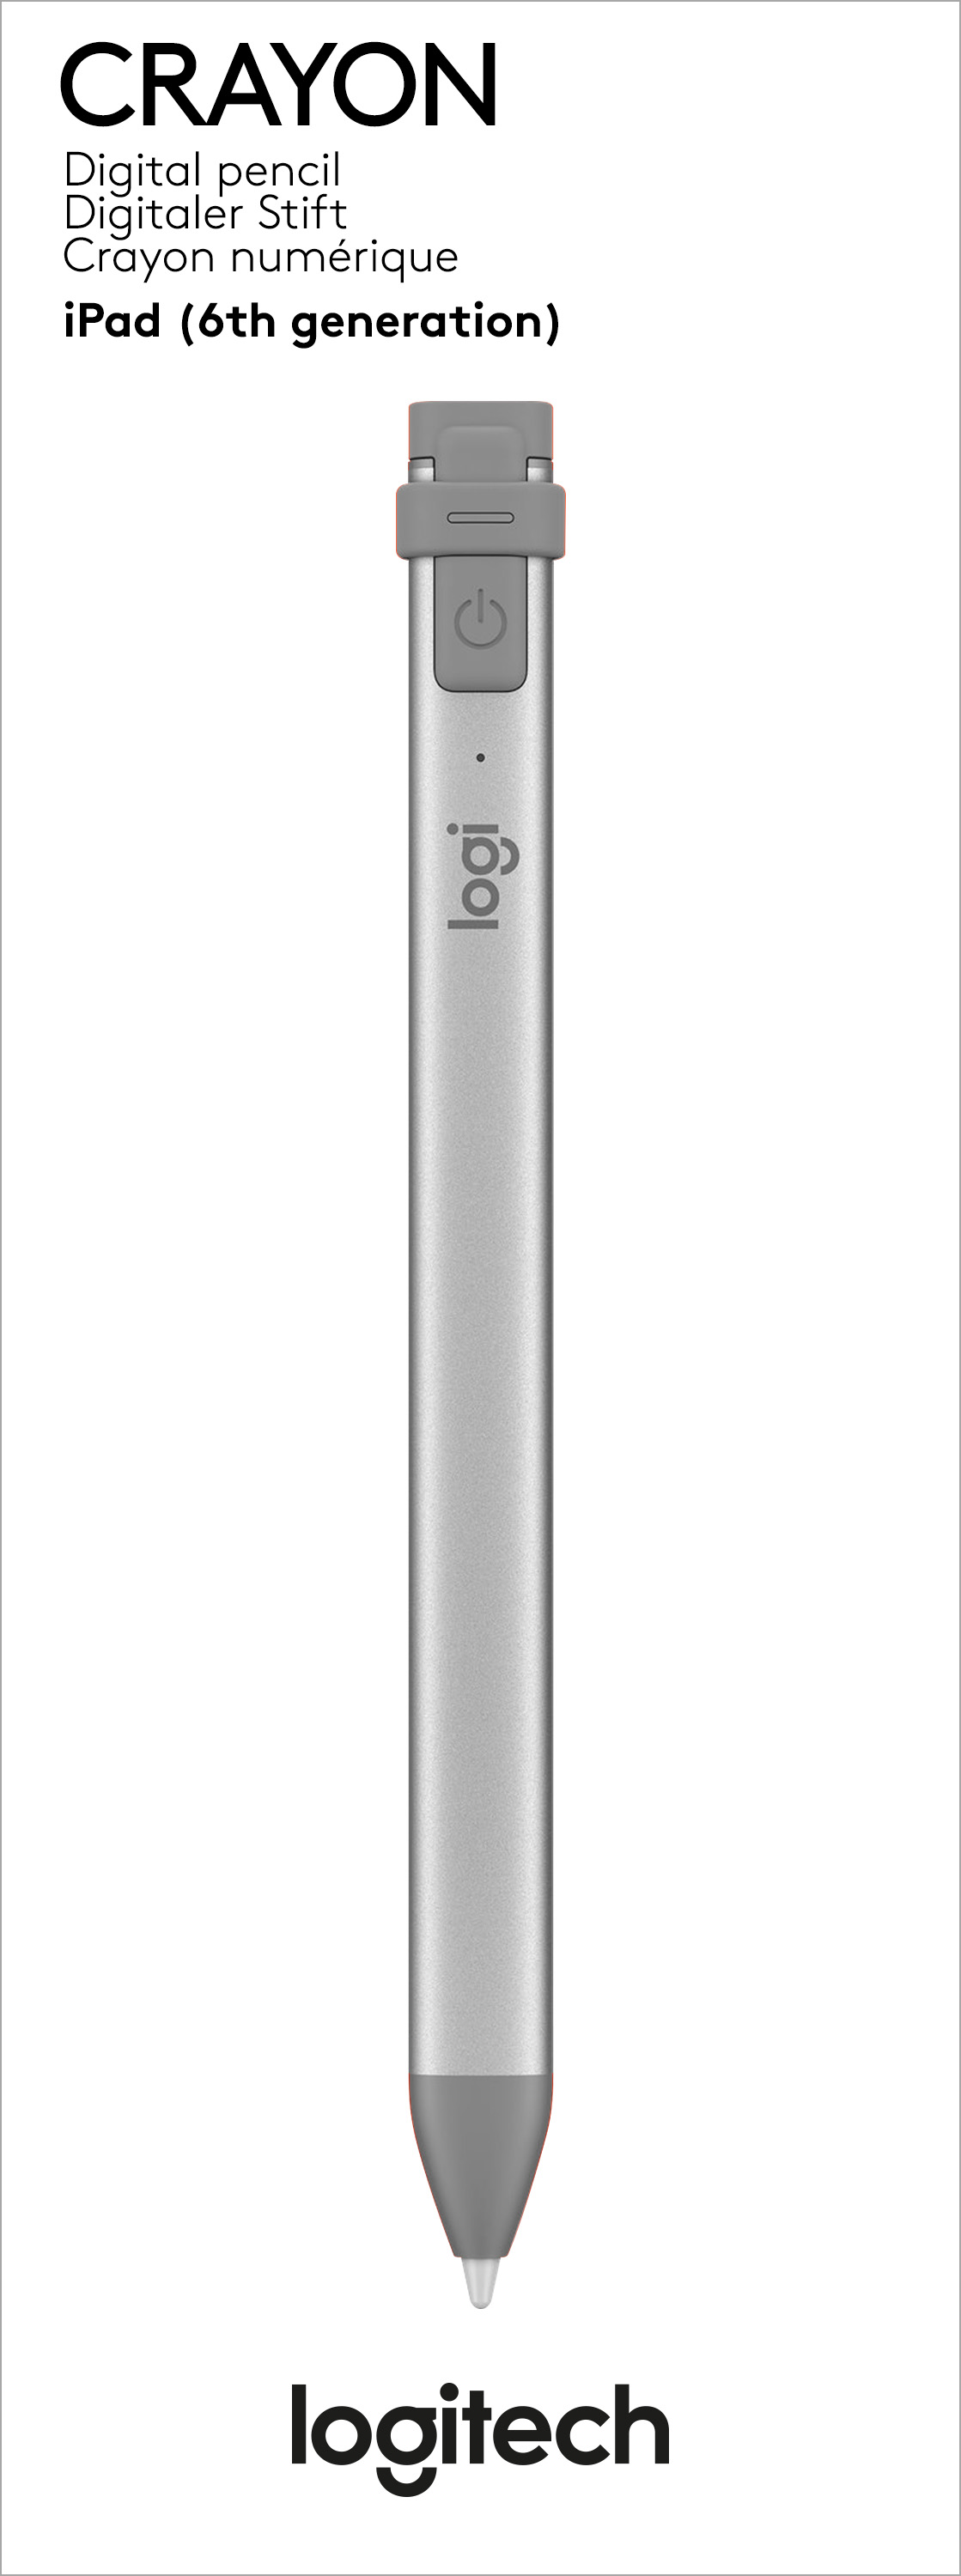 Logitech Digital Pen CRAYON, Lightning, Wireless, silber-grau für Apple iPad, iPad Mini/Air/Pro ab 2018, Retail